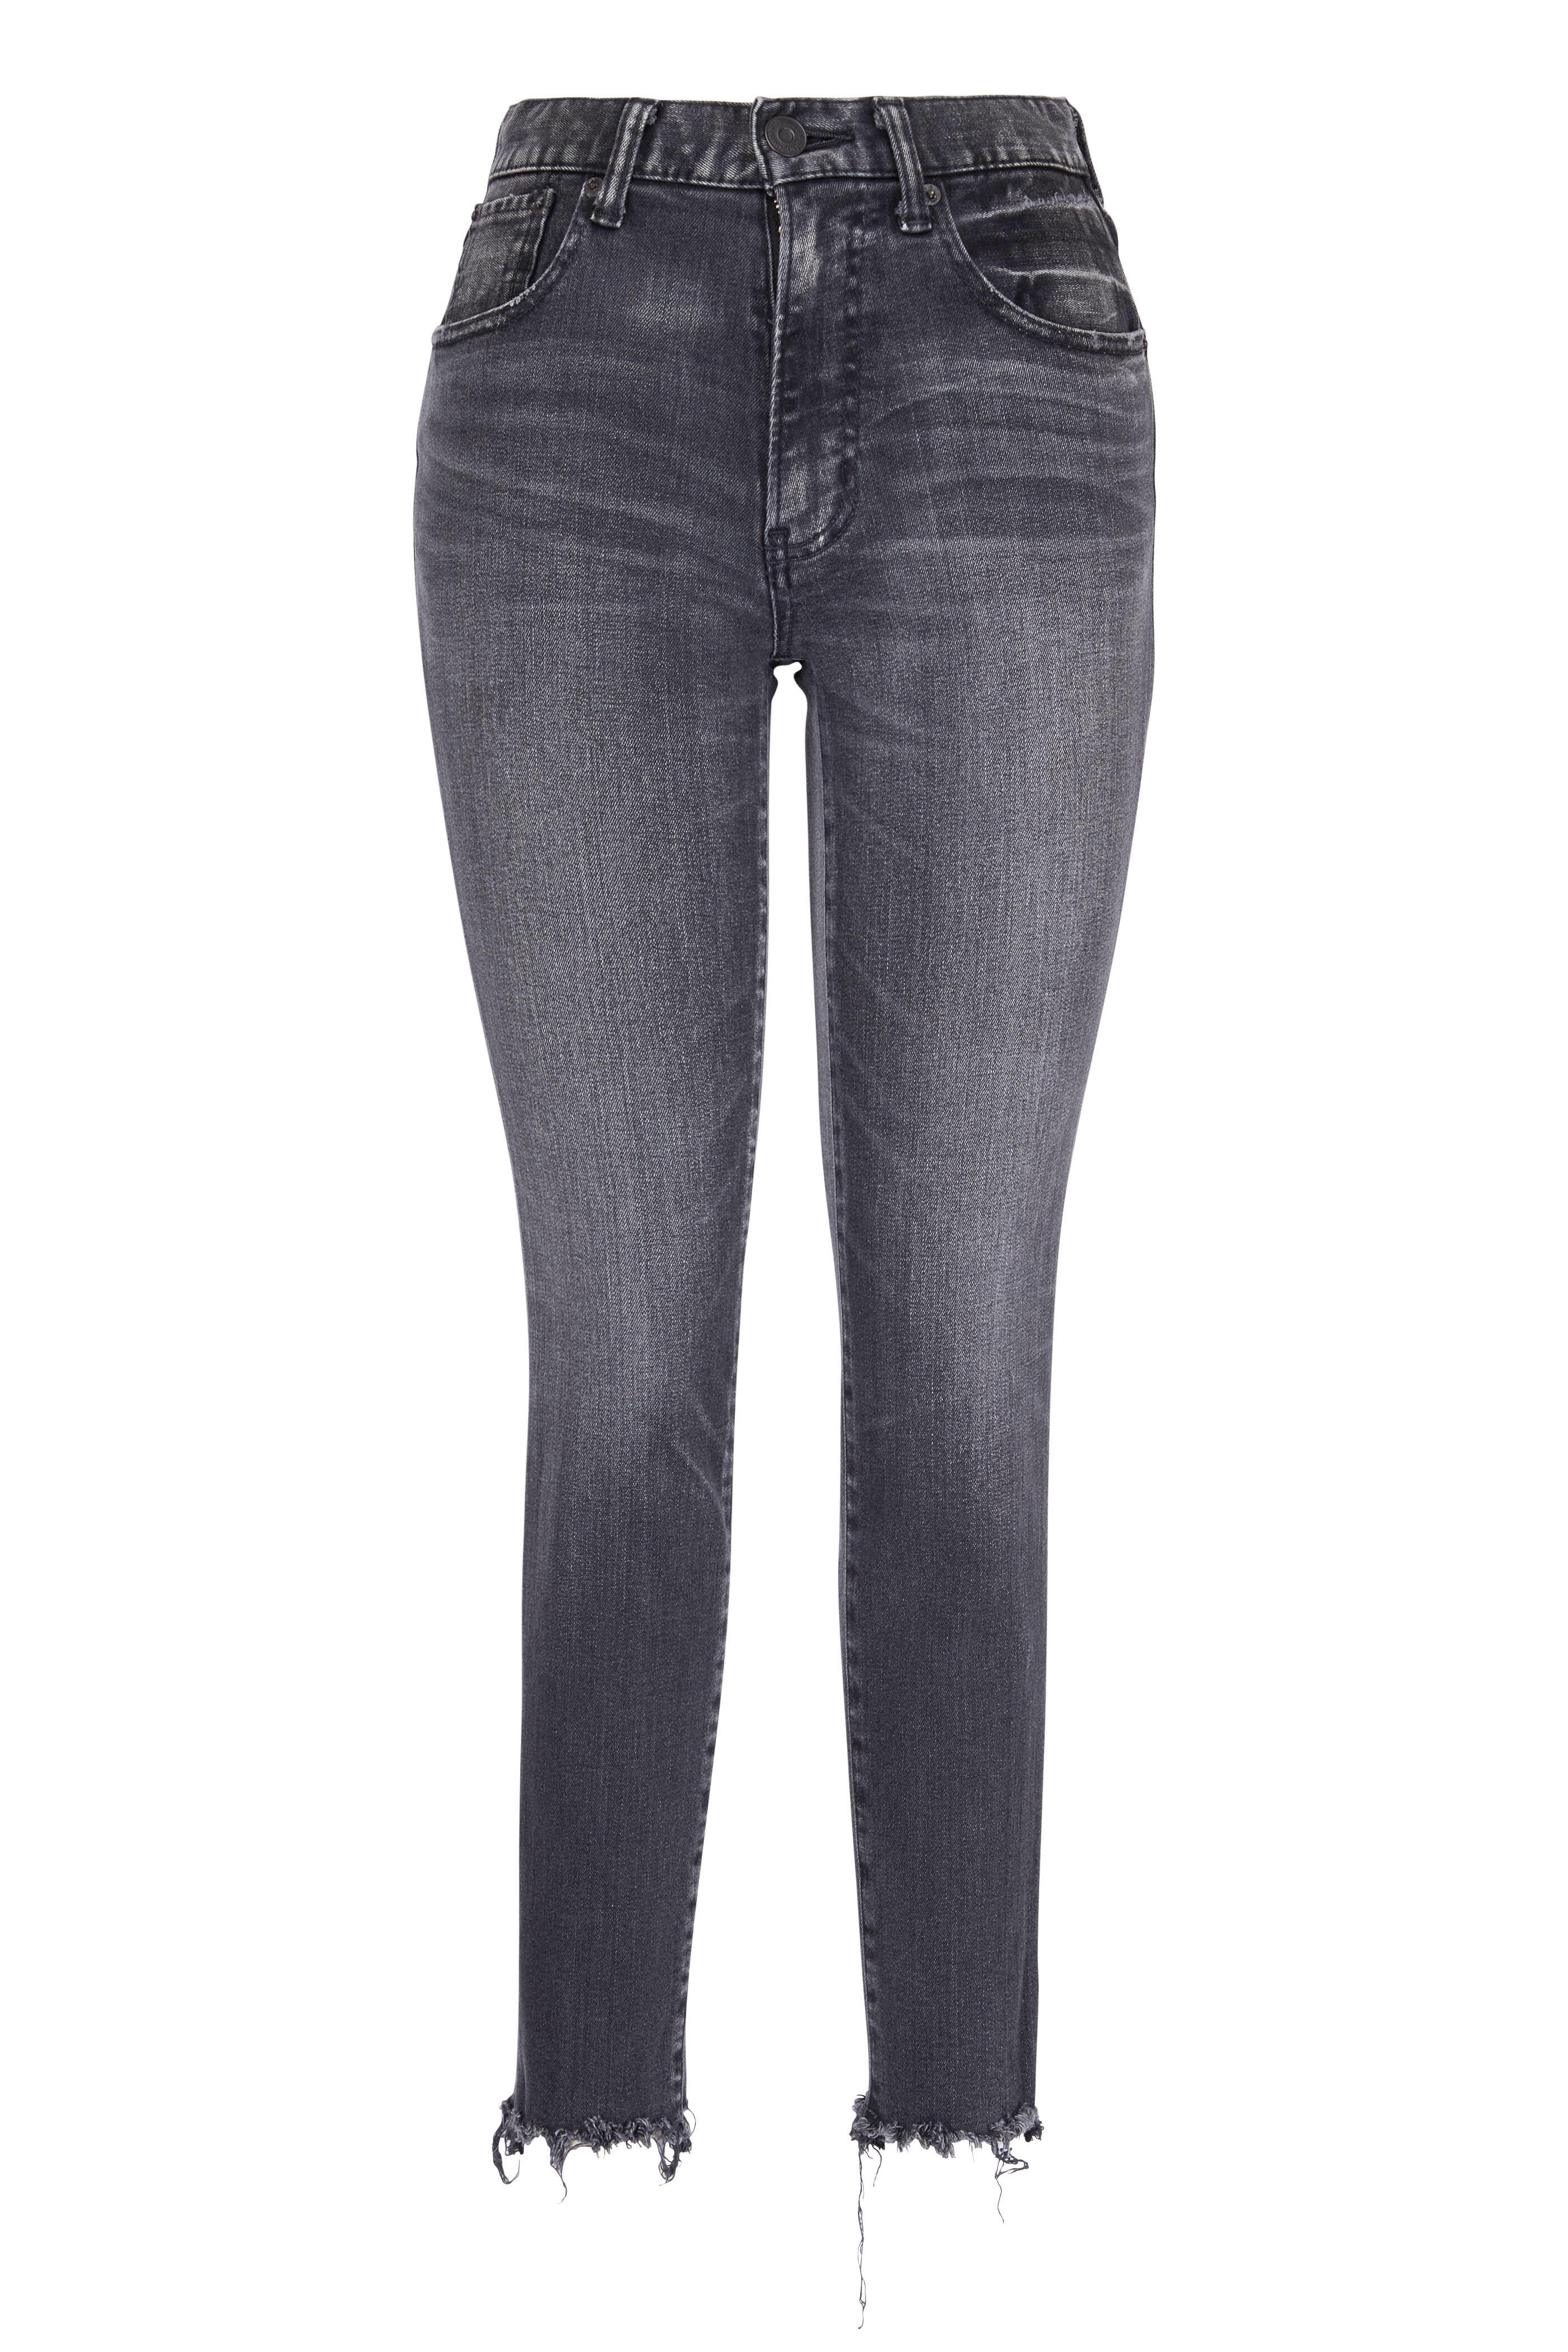 Saint Laurent Distressed Denim Skinny Jeans Black White Gray (Size 27)